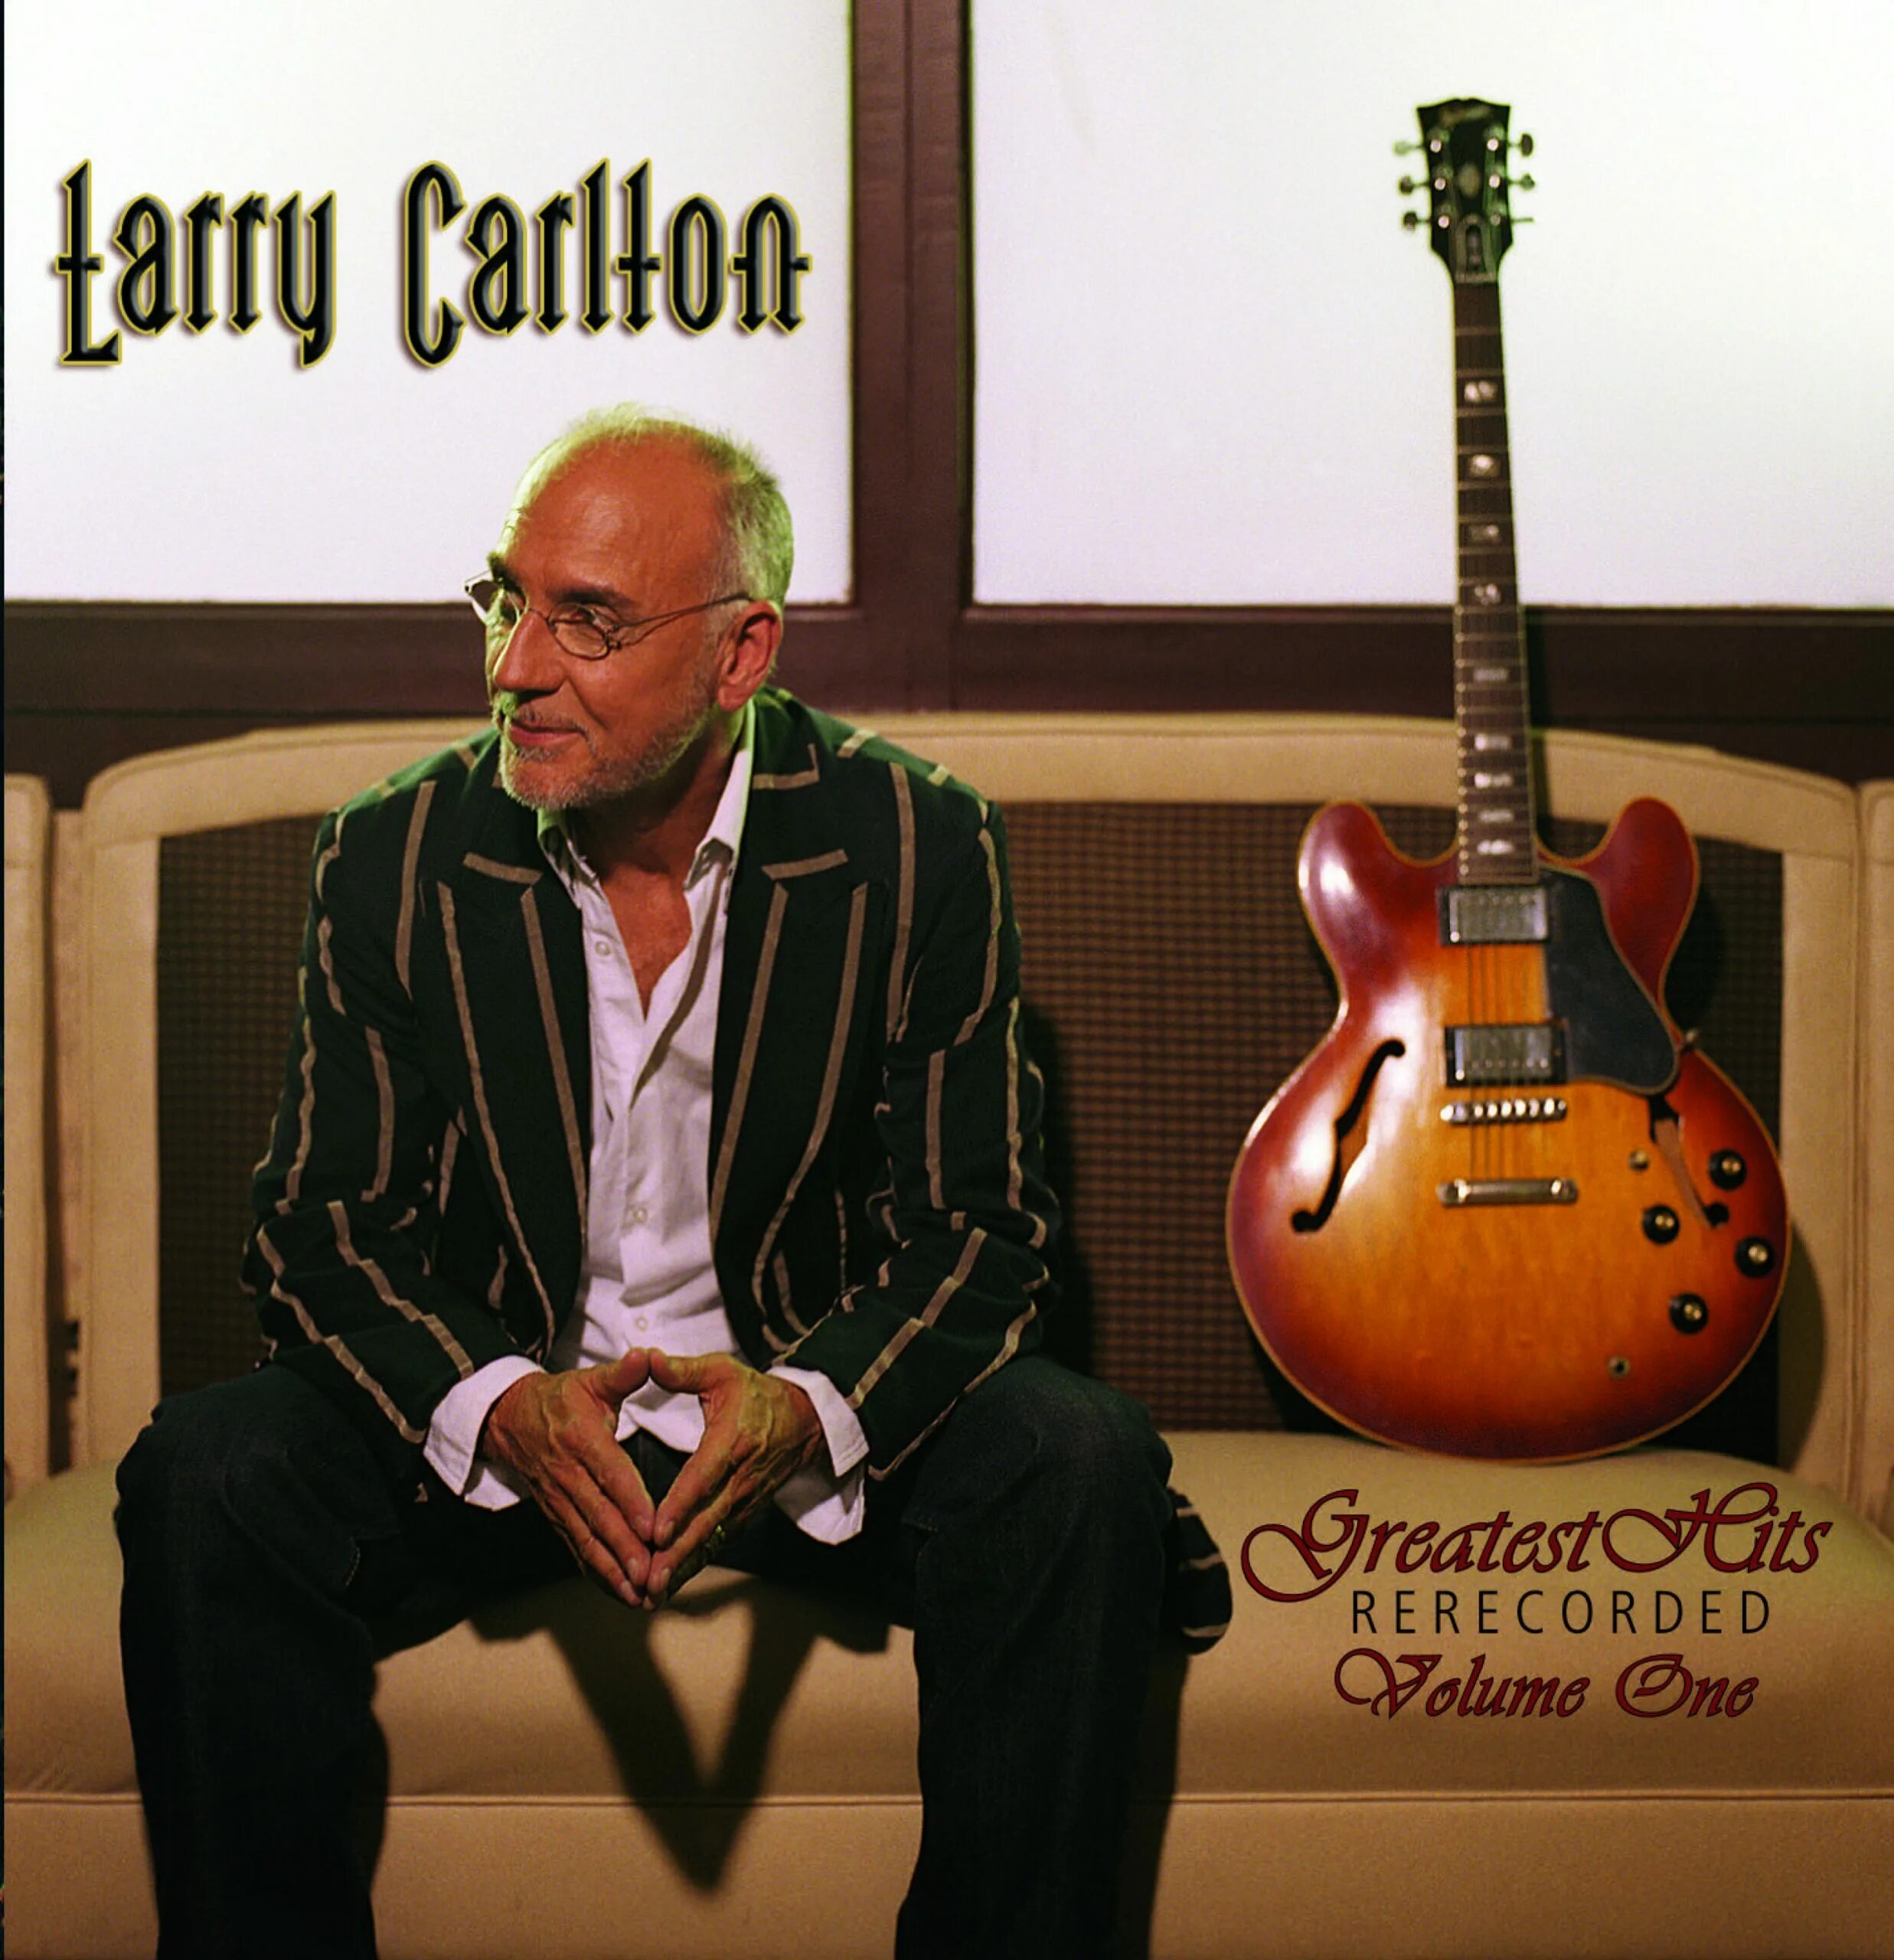 Ларри Карлтон. Larry Carlton - Greatest Hits Rerecorded Vol.1. Larry Carlton foto. Ларри Карлтон – американский гитарист..